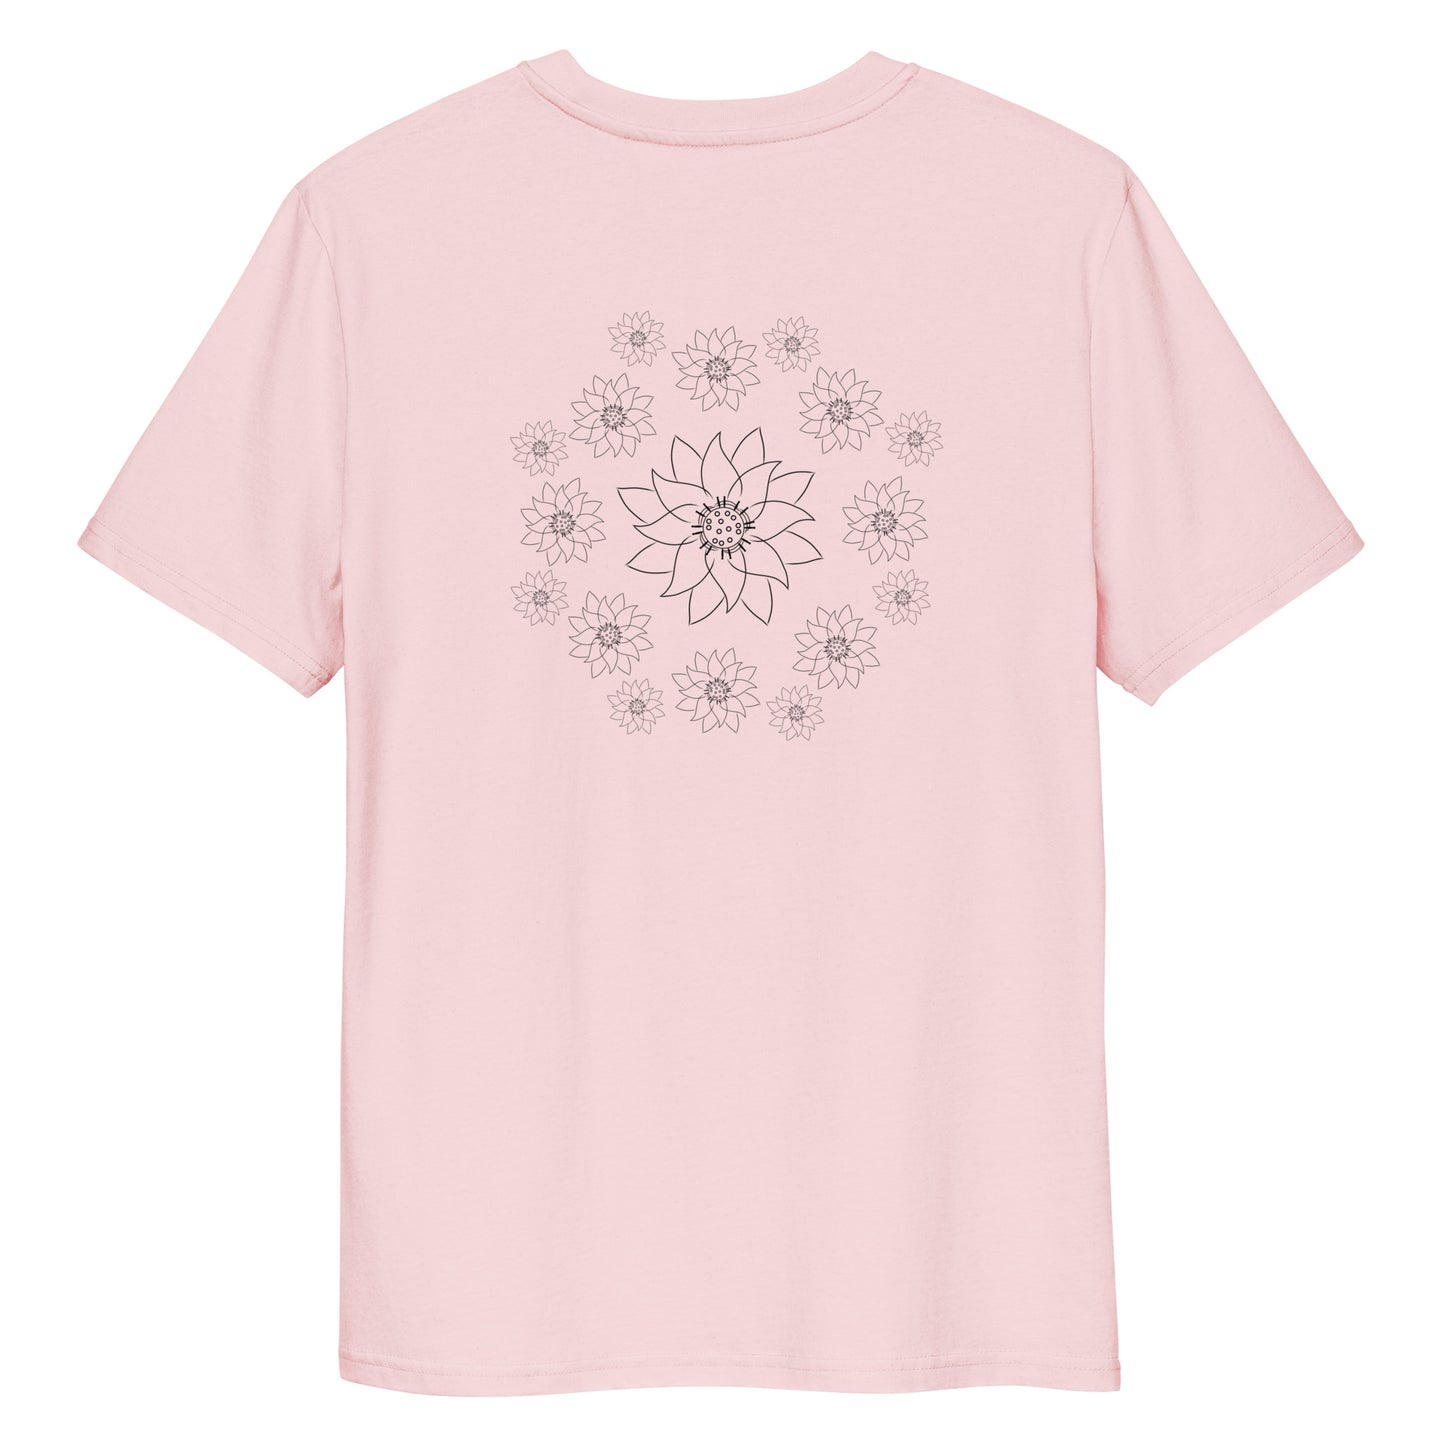 Lotus Dream | 100% Organic Cotton T Shirt in pink back